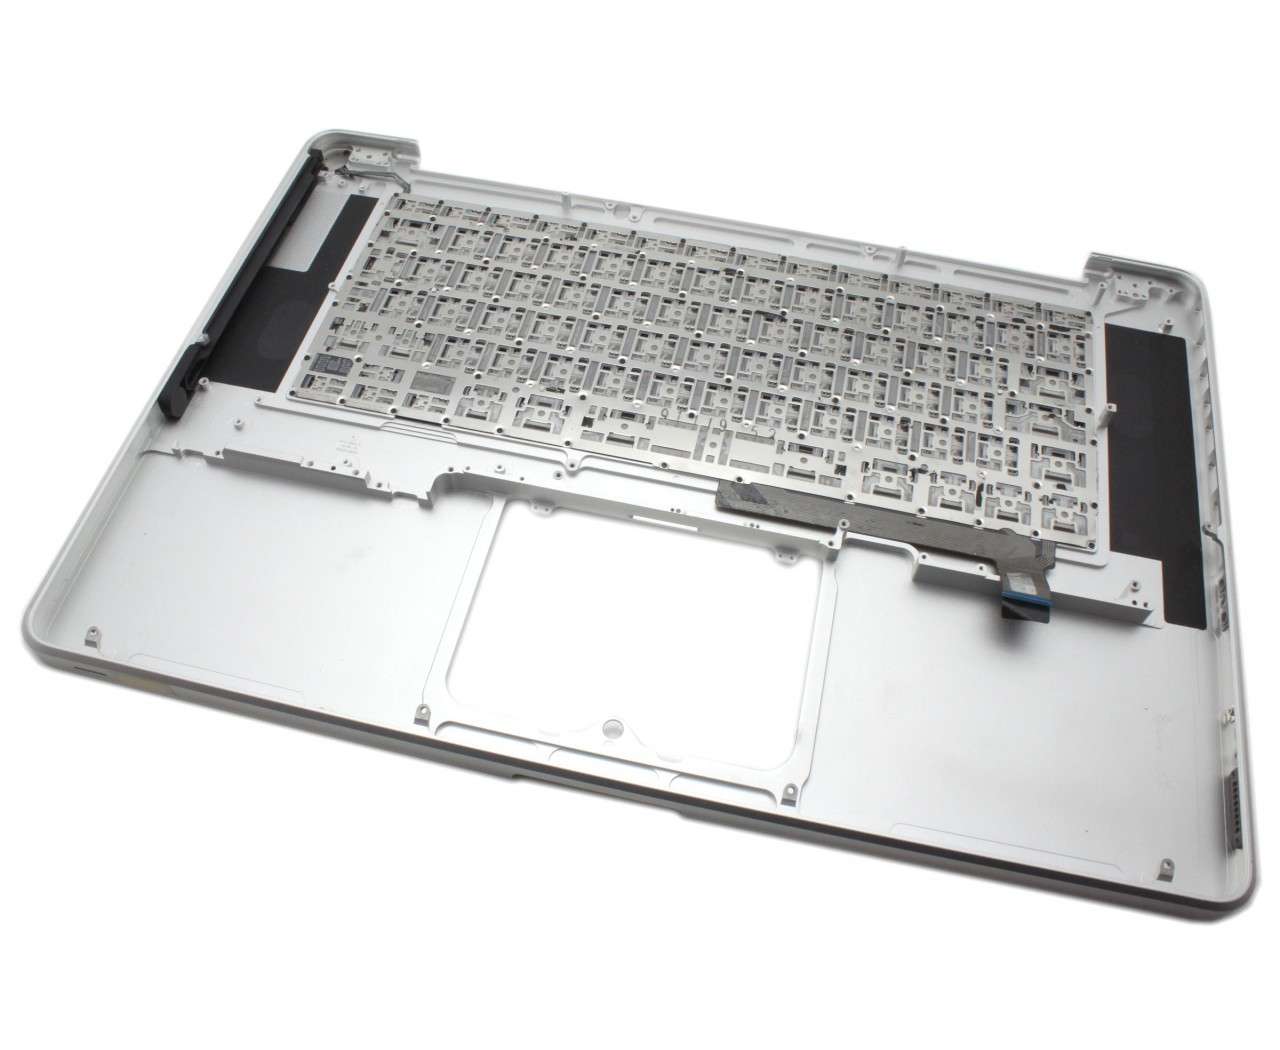 Tastatura Apple MacBook Pro 15 MD322 Neagra cu Palmrest Argintiu Refurbished Apple Apple